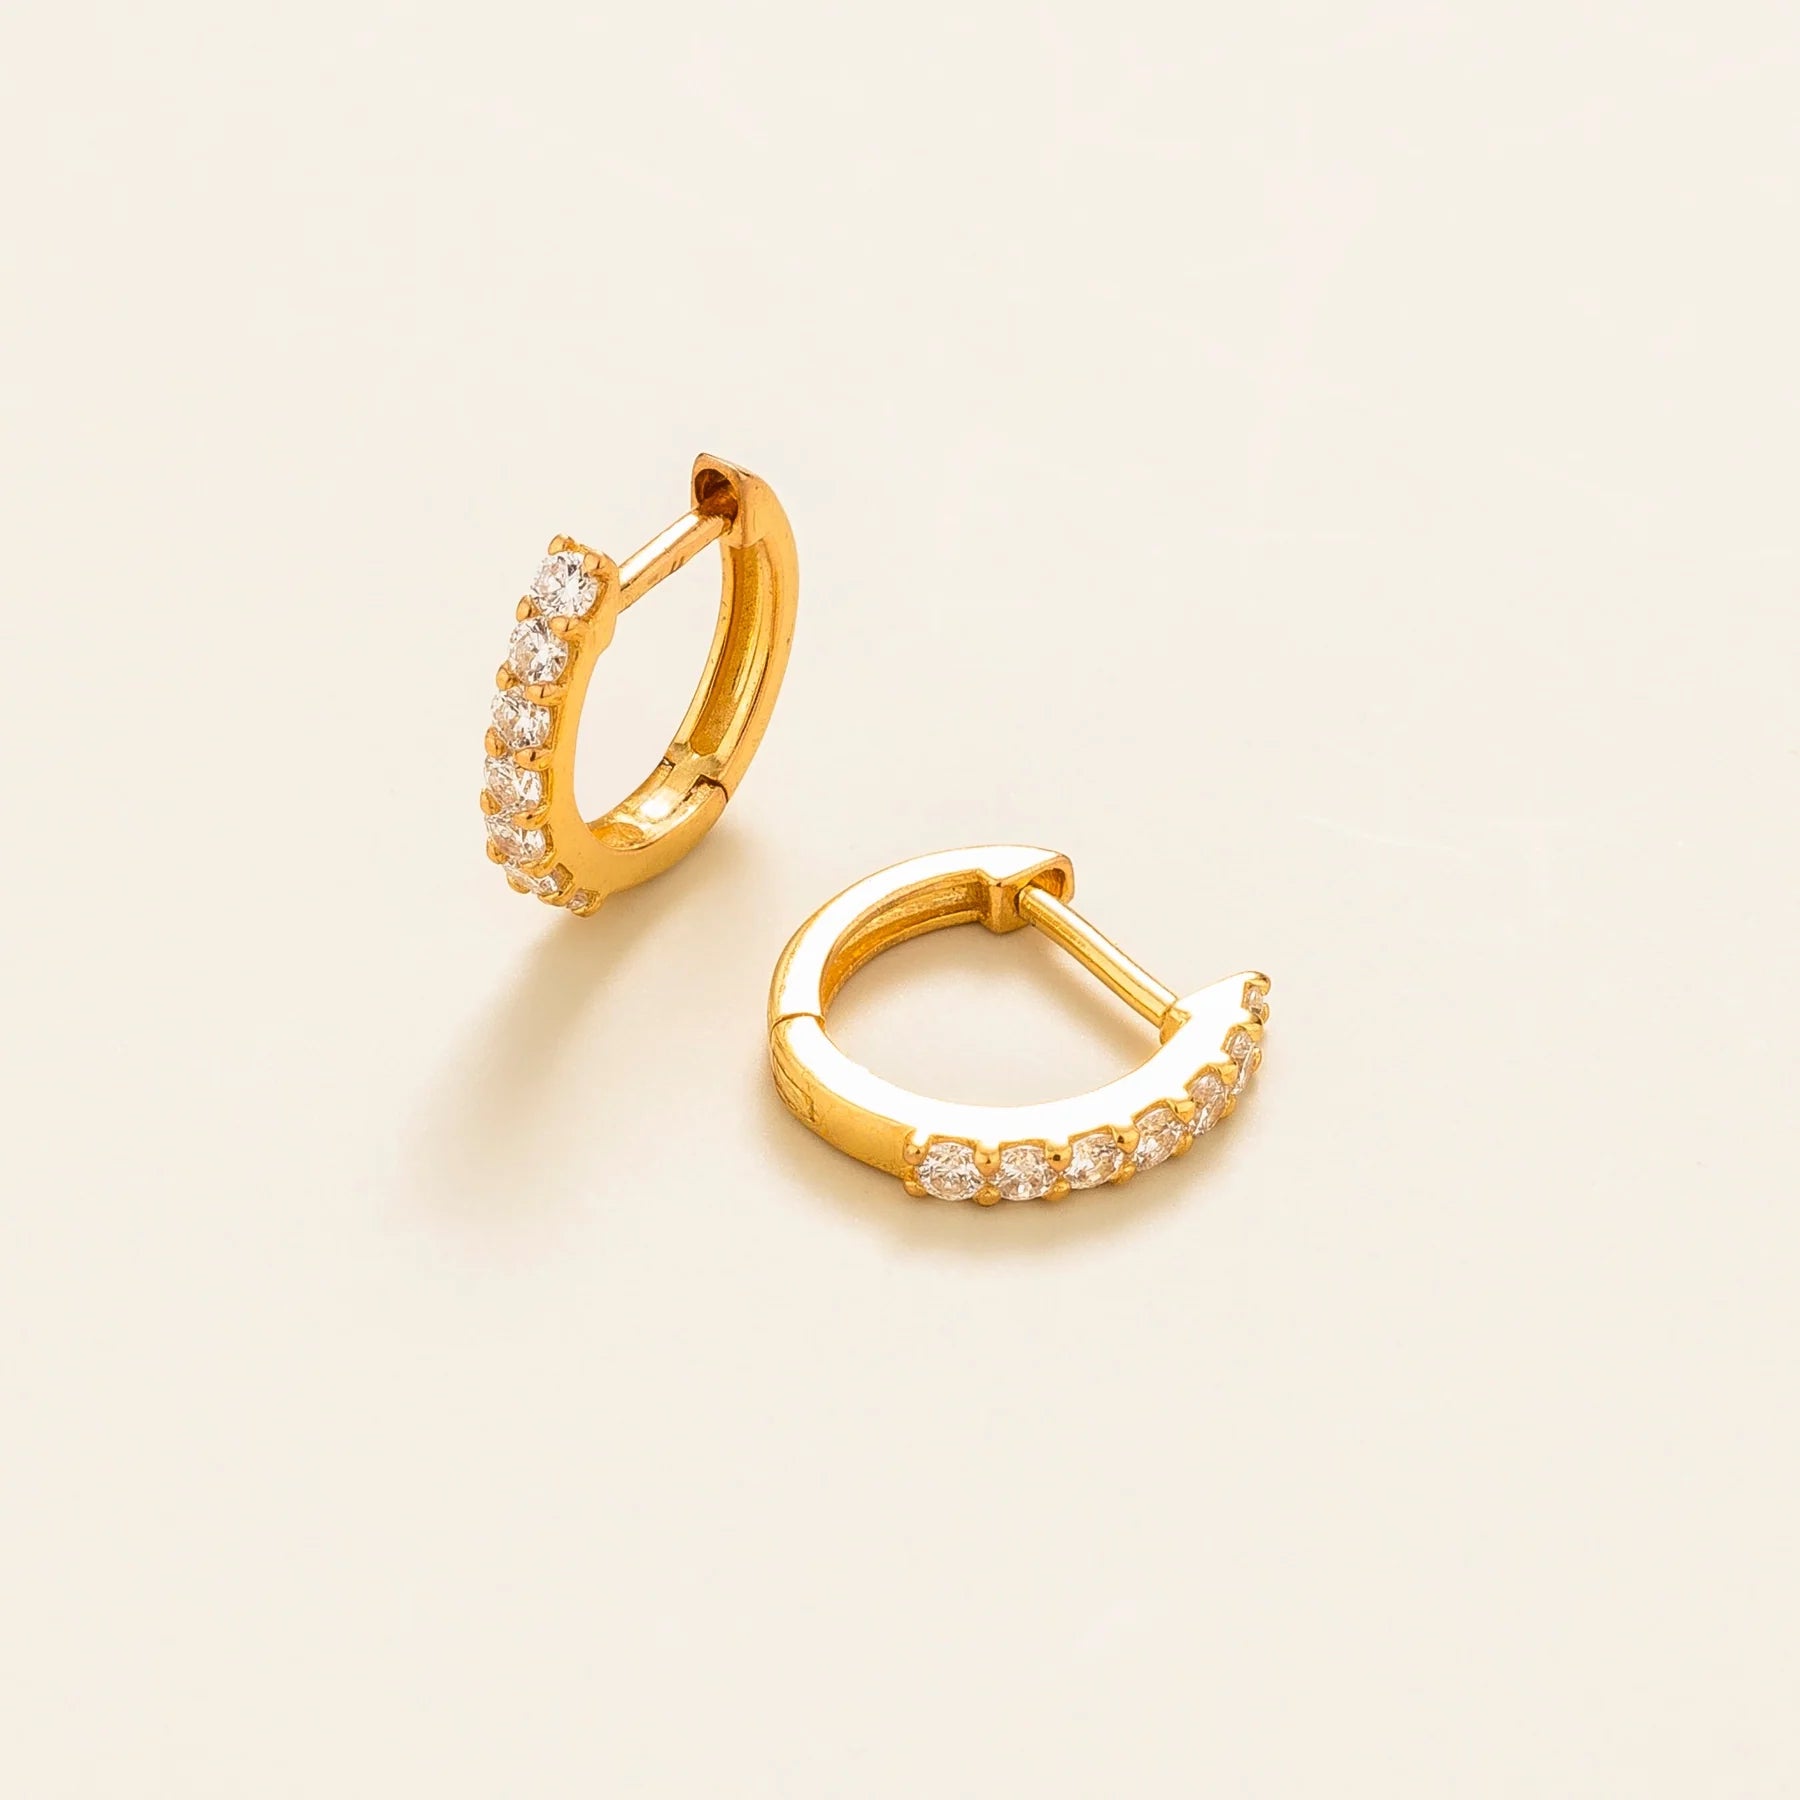 Stacy gold huggie earrings set with Diamond Bespoke Jewellery From London